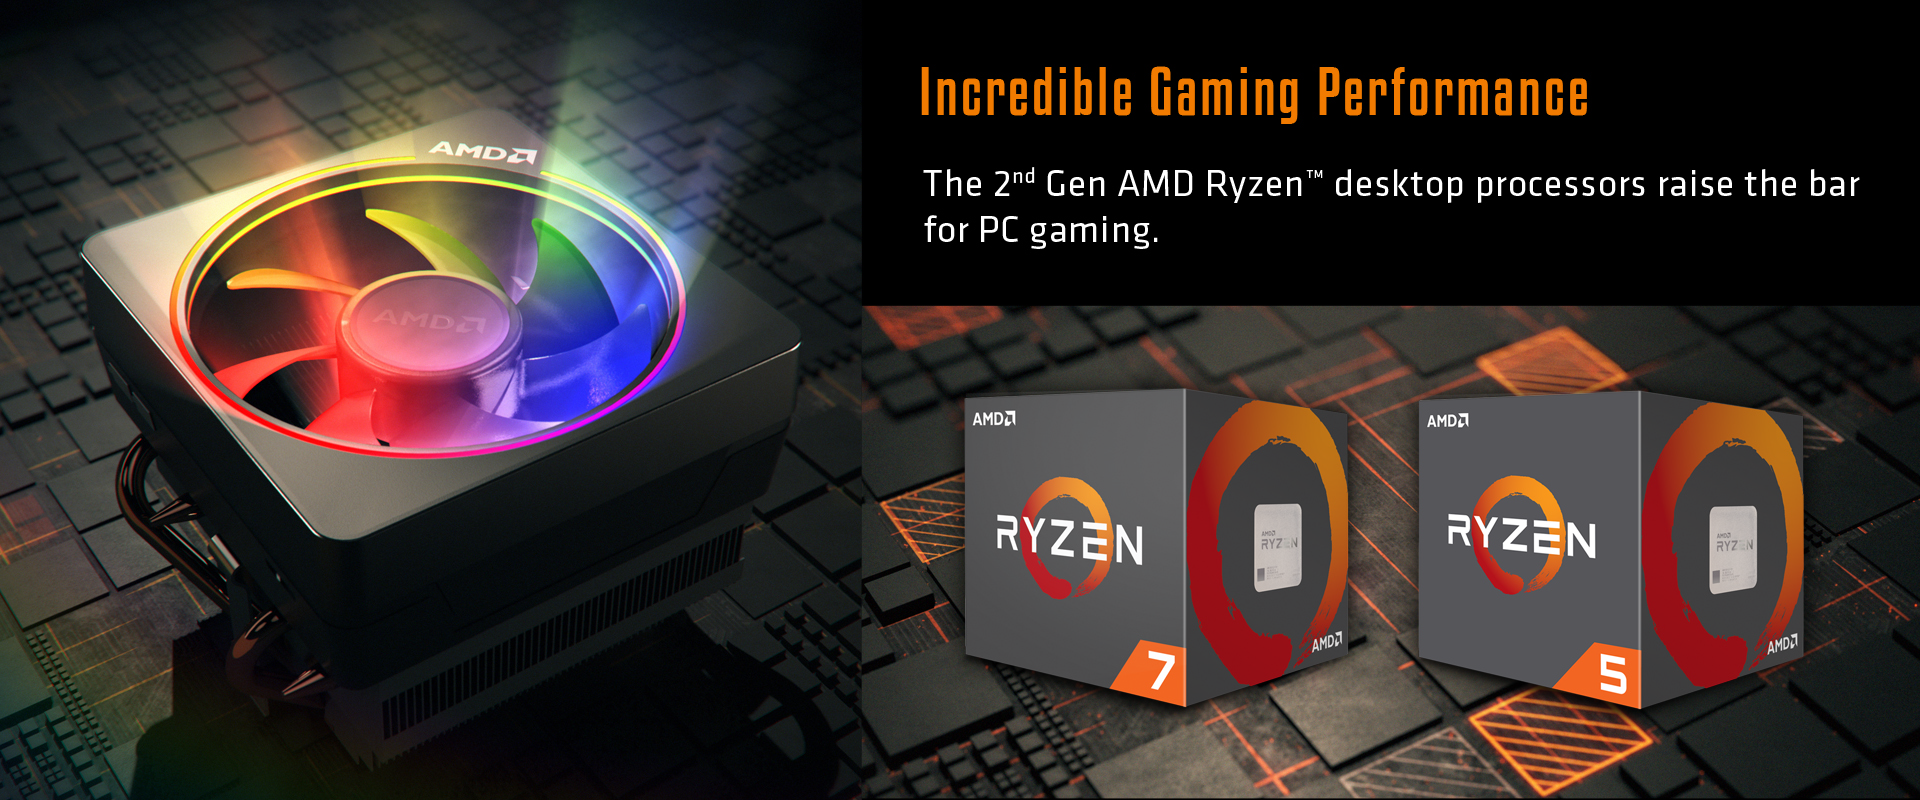 AMD Ryzen 2000 Series Desktop APUs with Built-in Vega GPU Cores